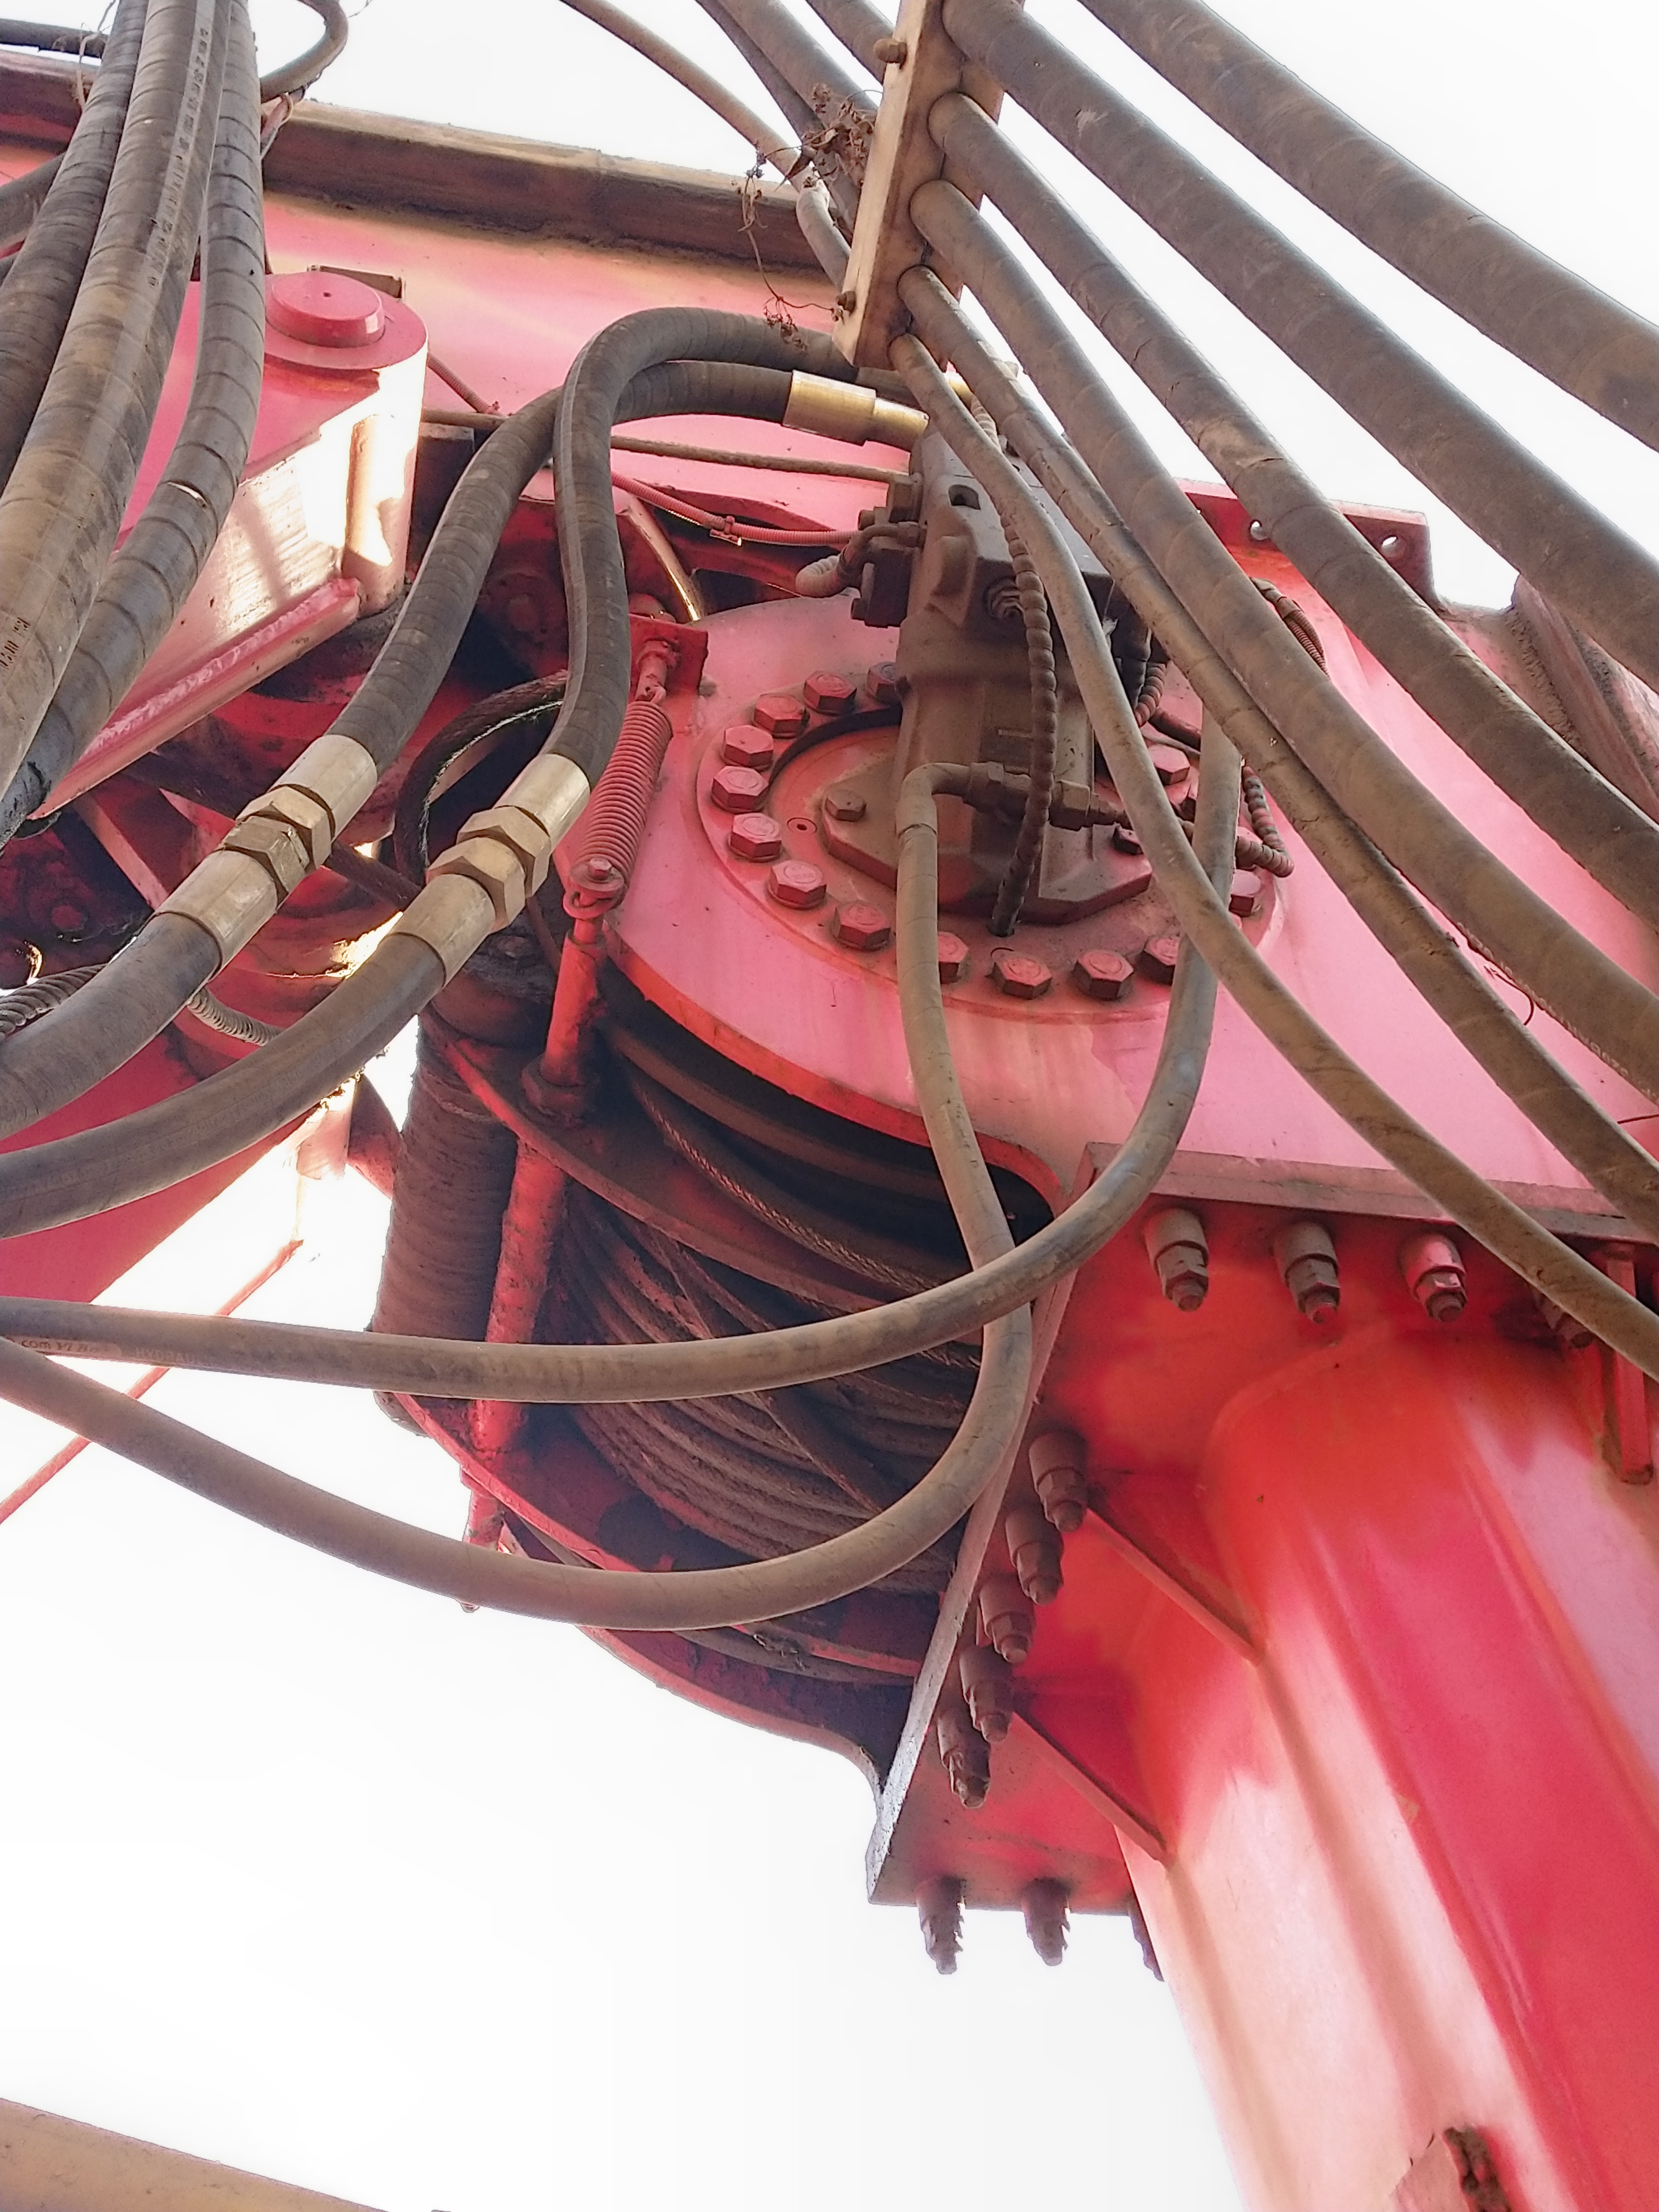 SANY SR220C rotary drilling rig